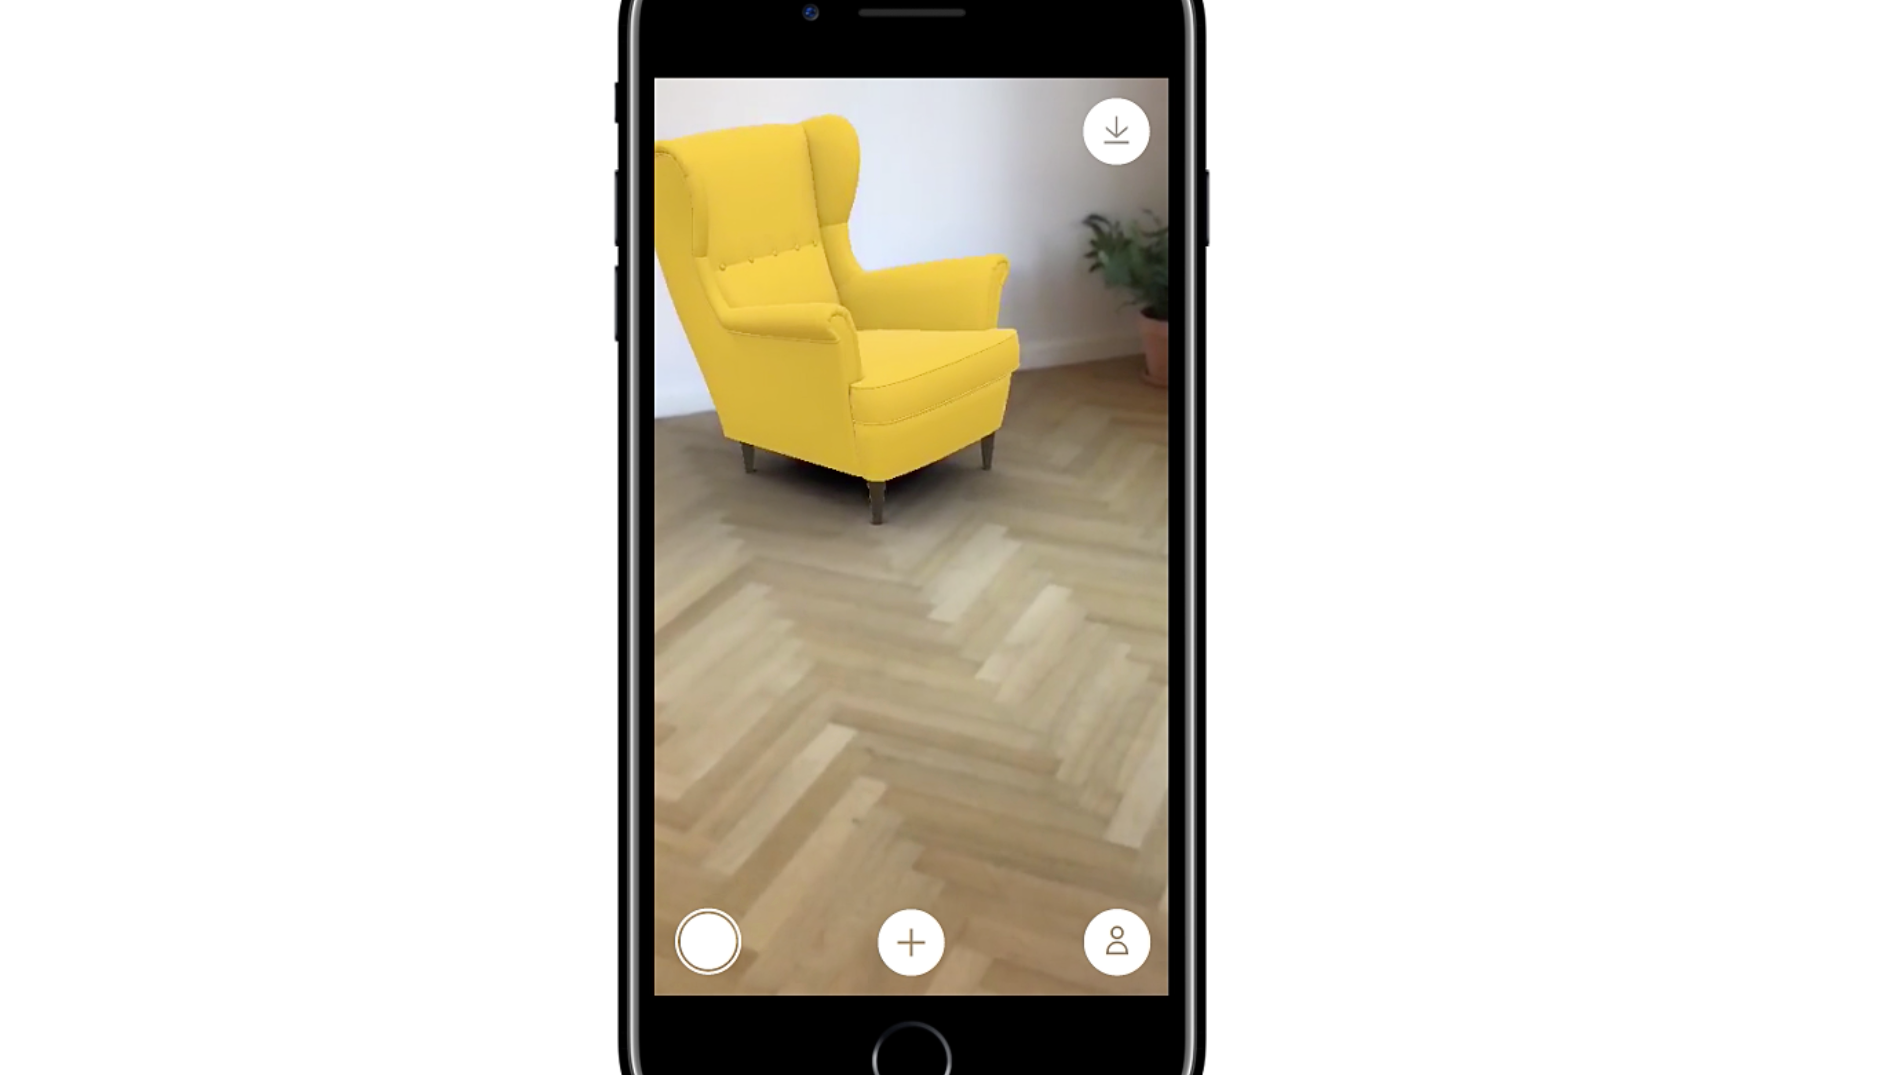 Opwekking vingerafdruk verbergen Apple augmented reality: Get ready for thousands of apps